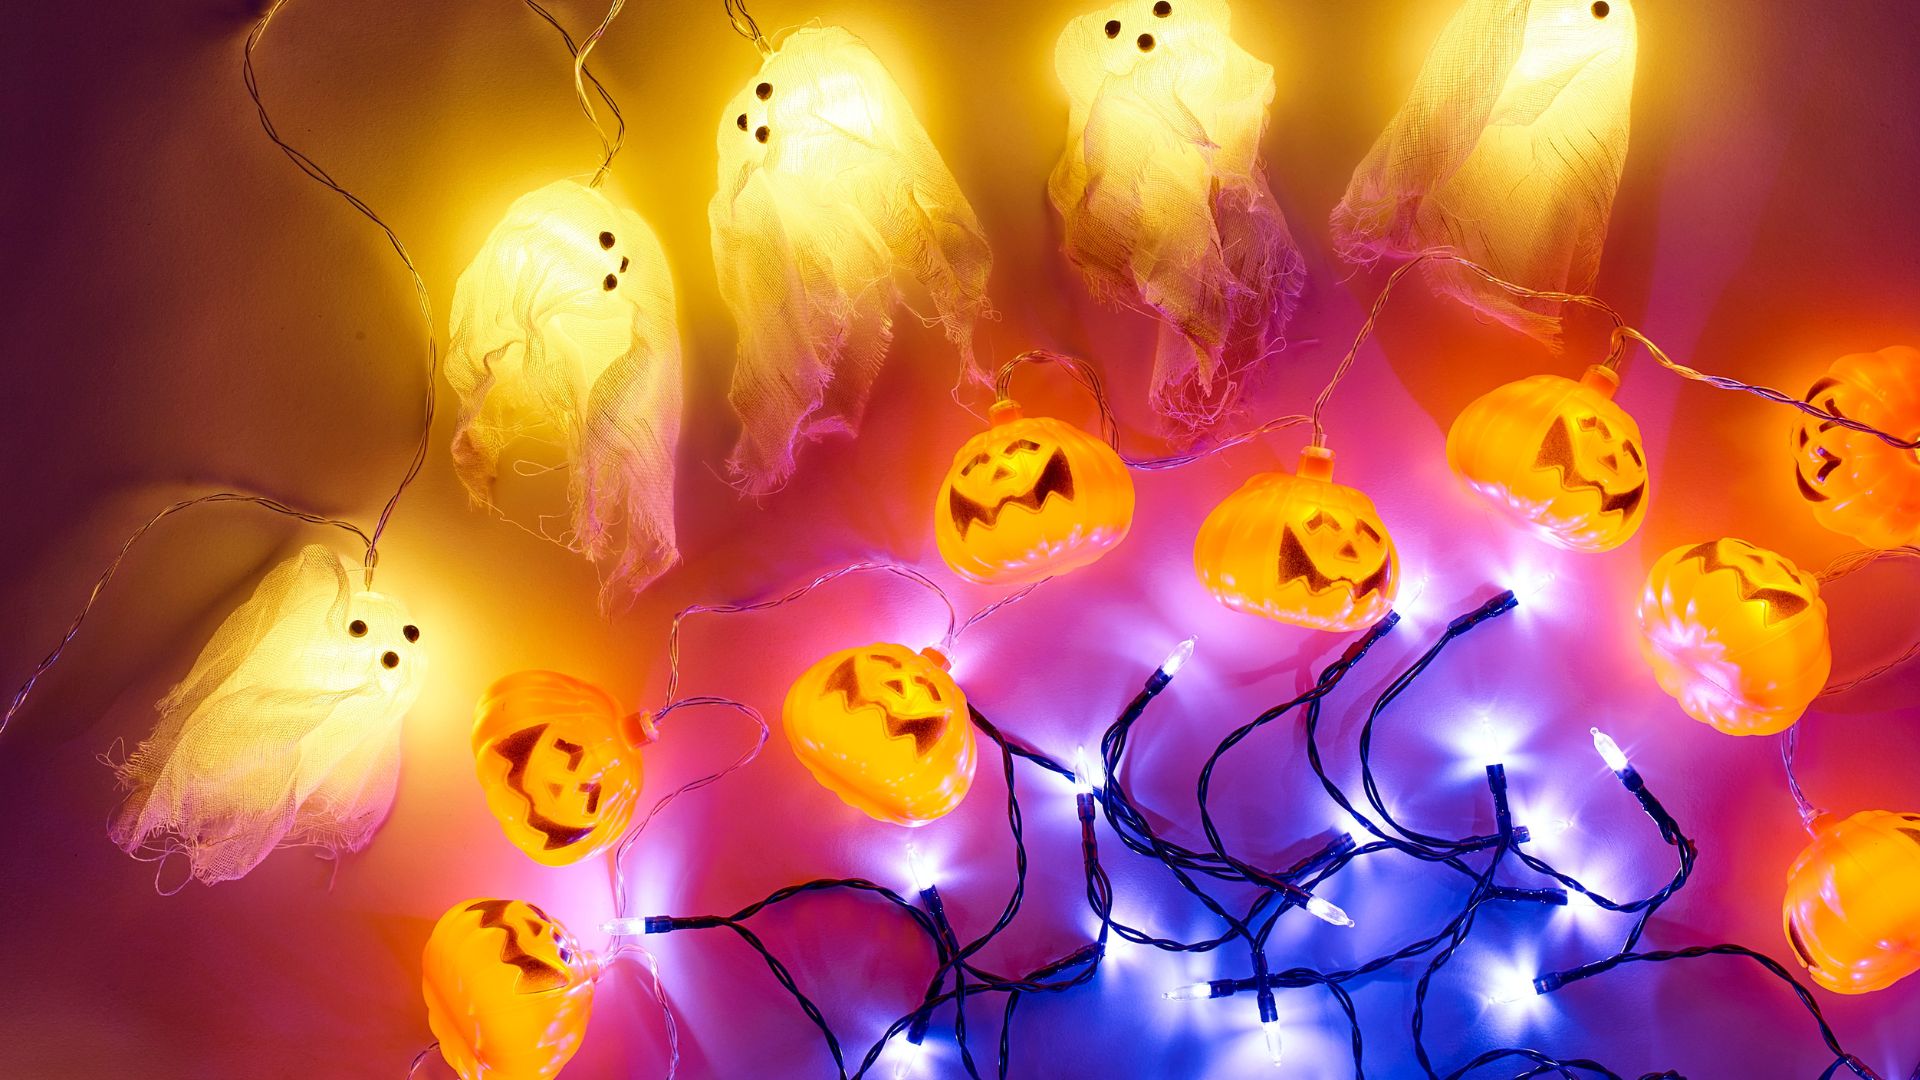 Ghost, Pumpkin and regular string lights